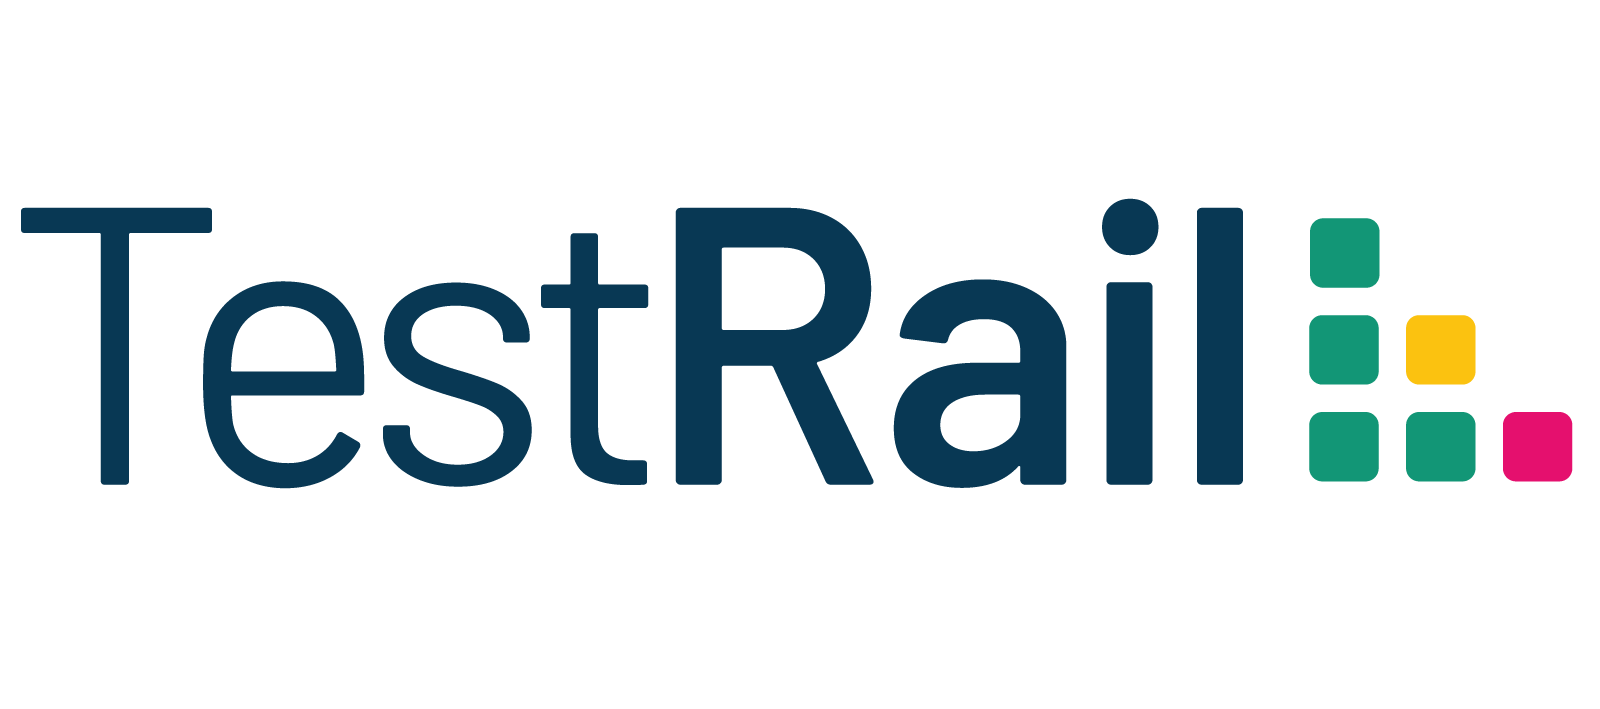 Illustration of TestRail logo